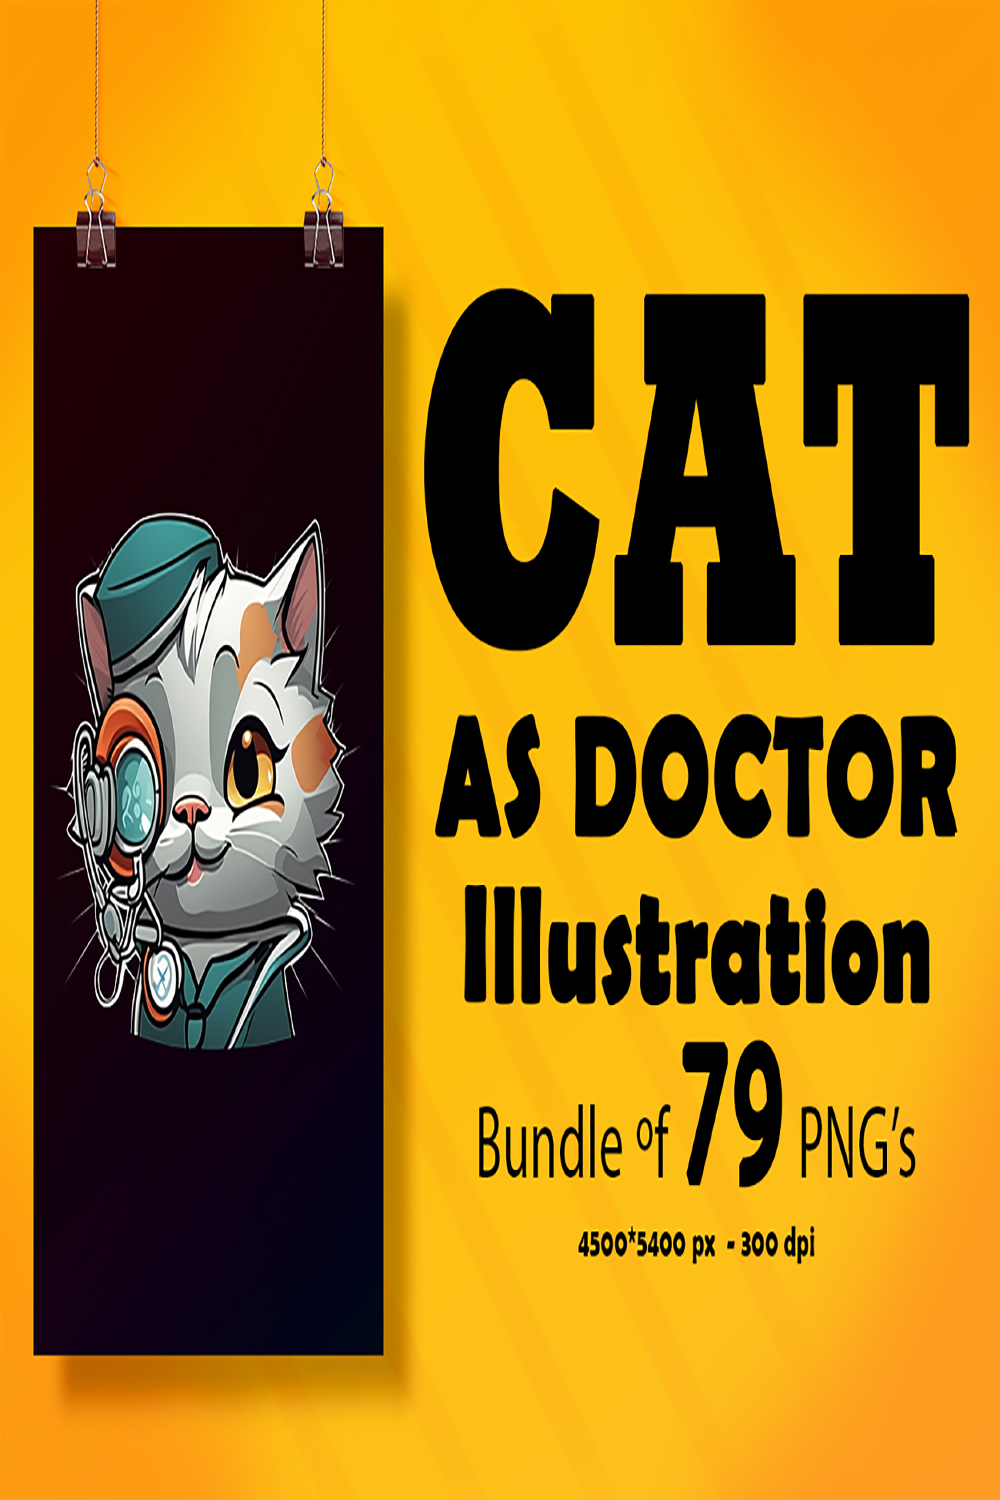 Doctor Cat Illustration for POD Clipart Bundle pinterest preview image.